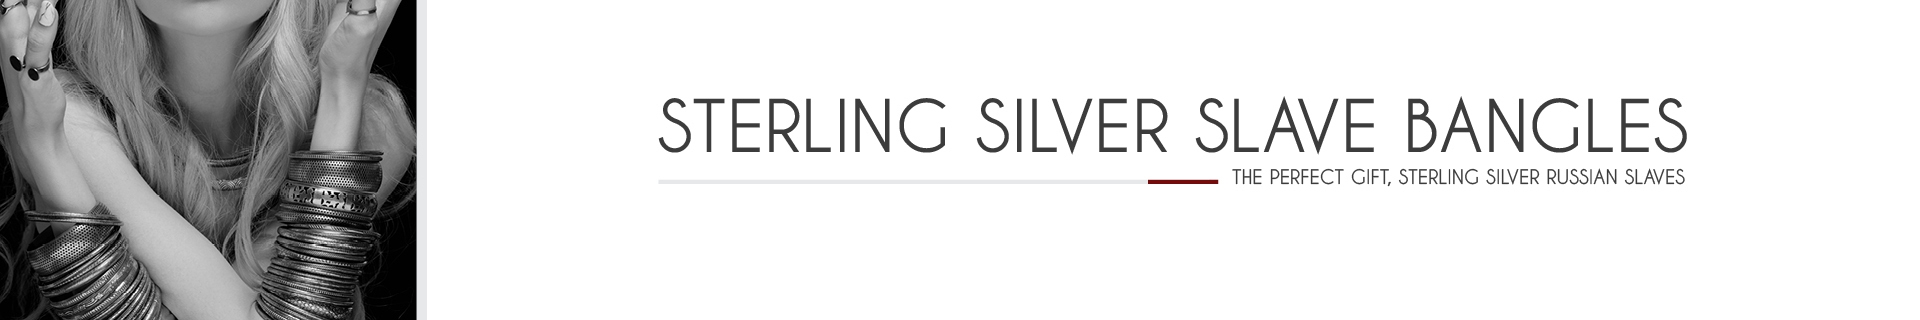  Silver Slave Bangles 